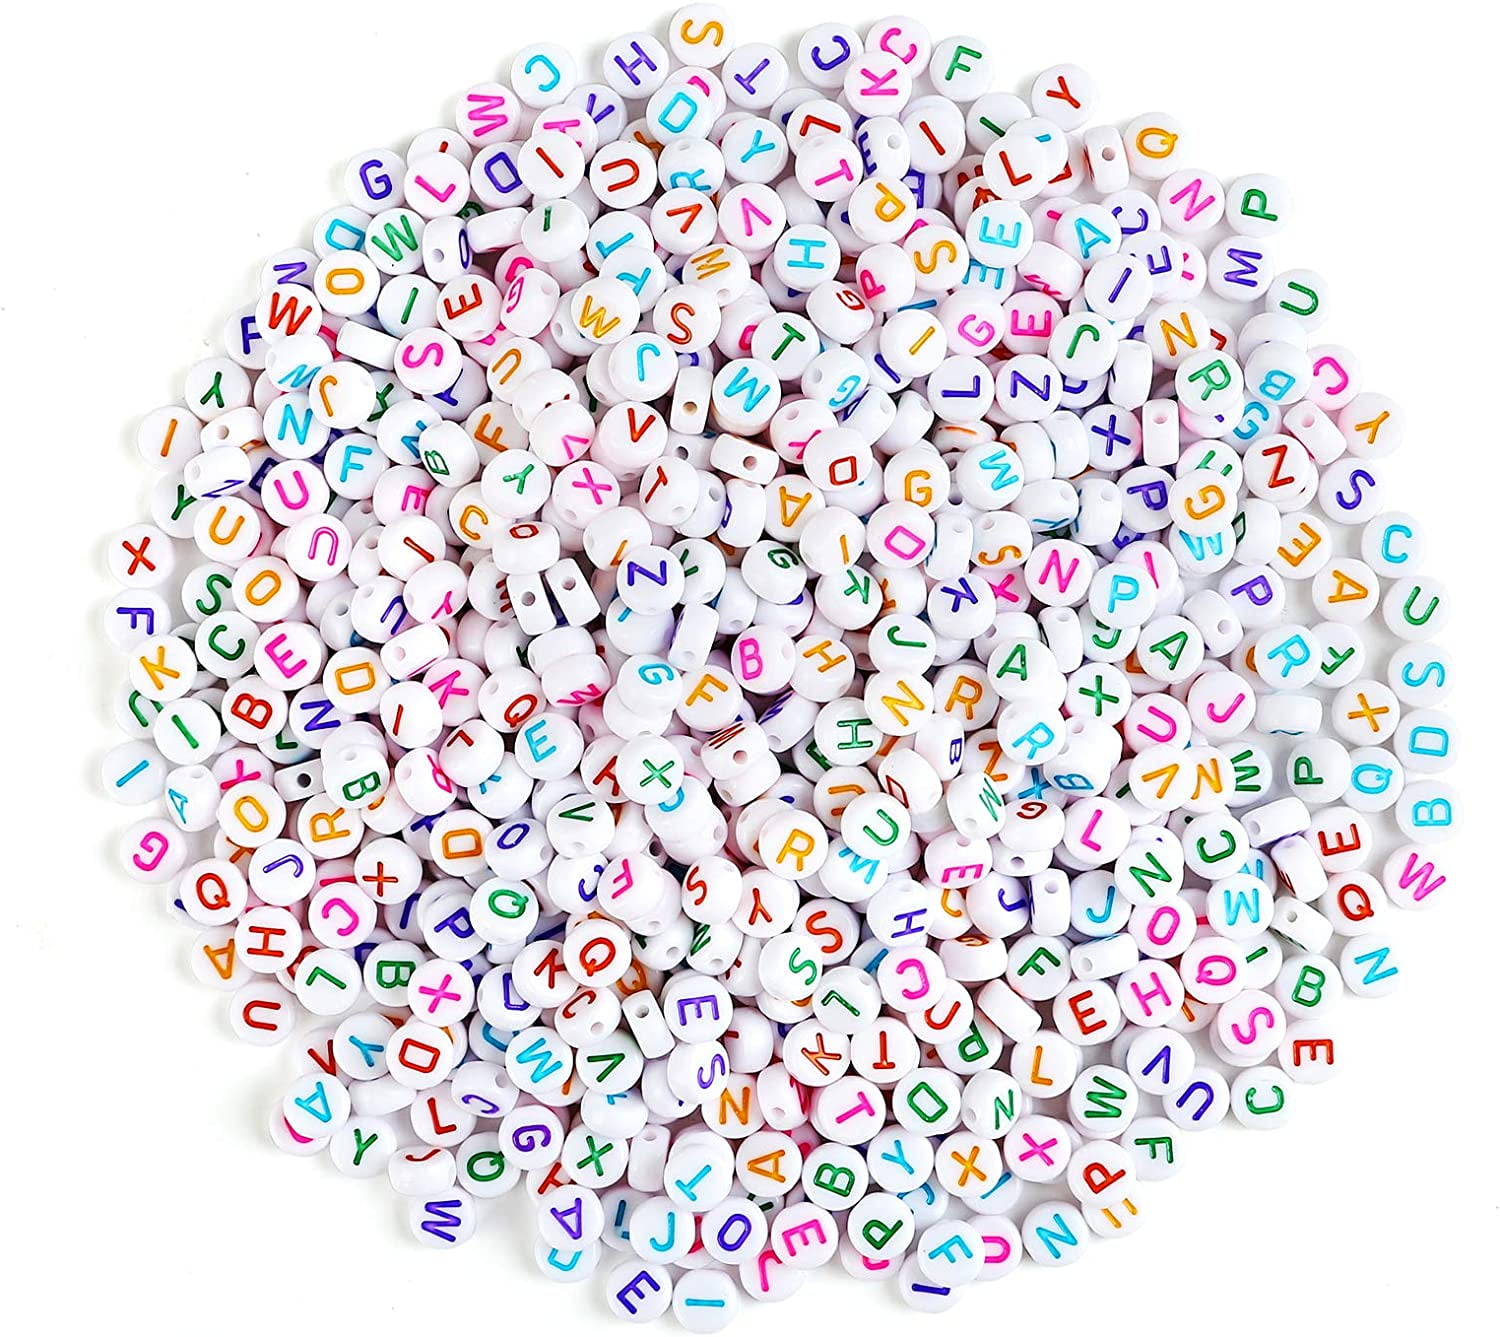 500Pcs Acrylic Vowel Letter Beads White White Alphabet Beads